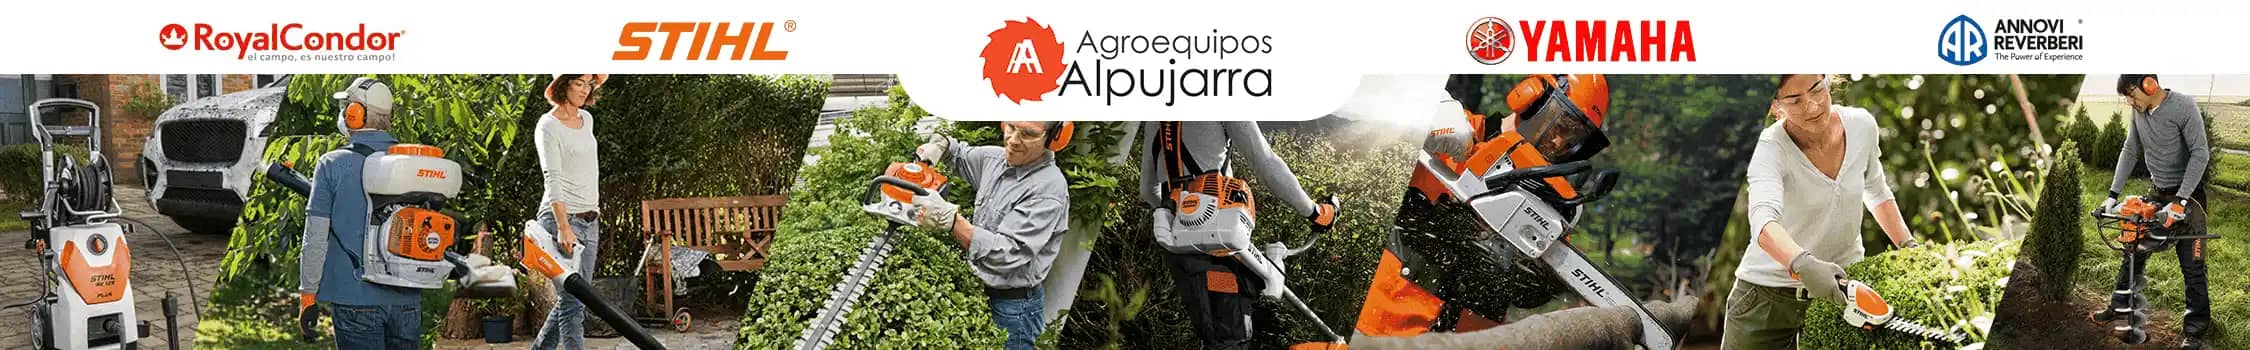 Agroequipos Alpujarra